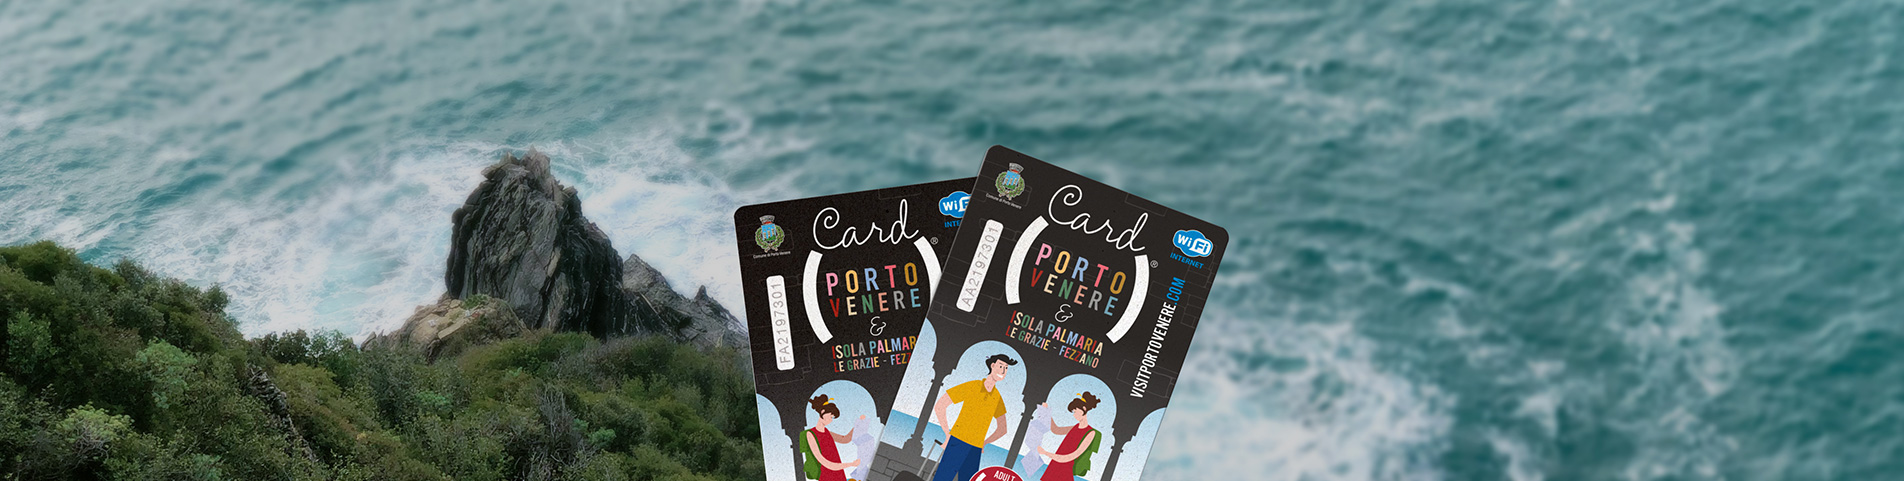 Photos of the Porto Venere Card